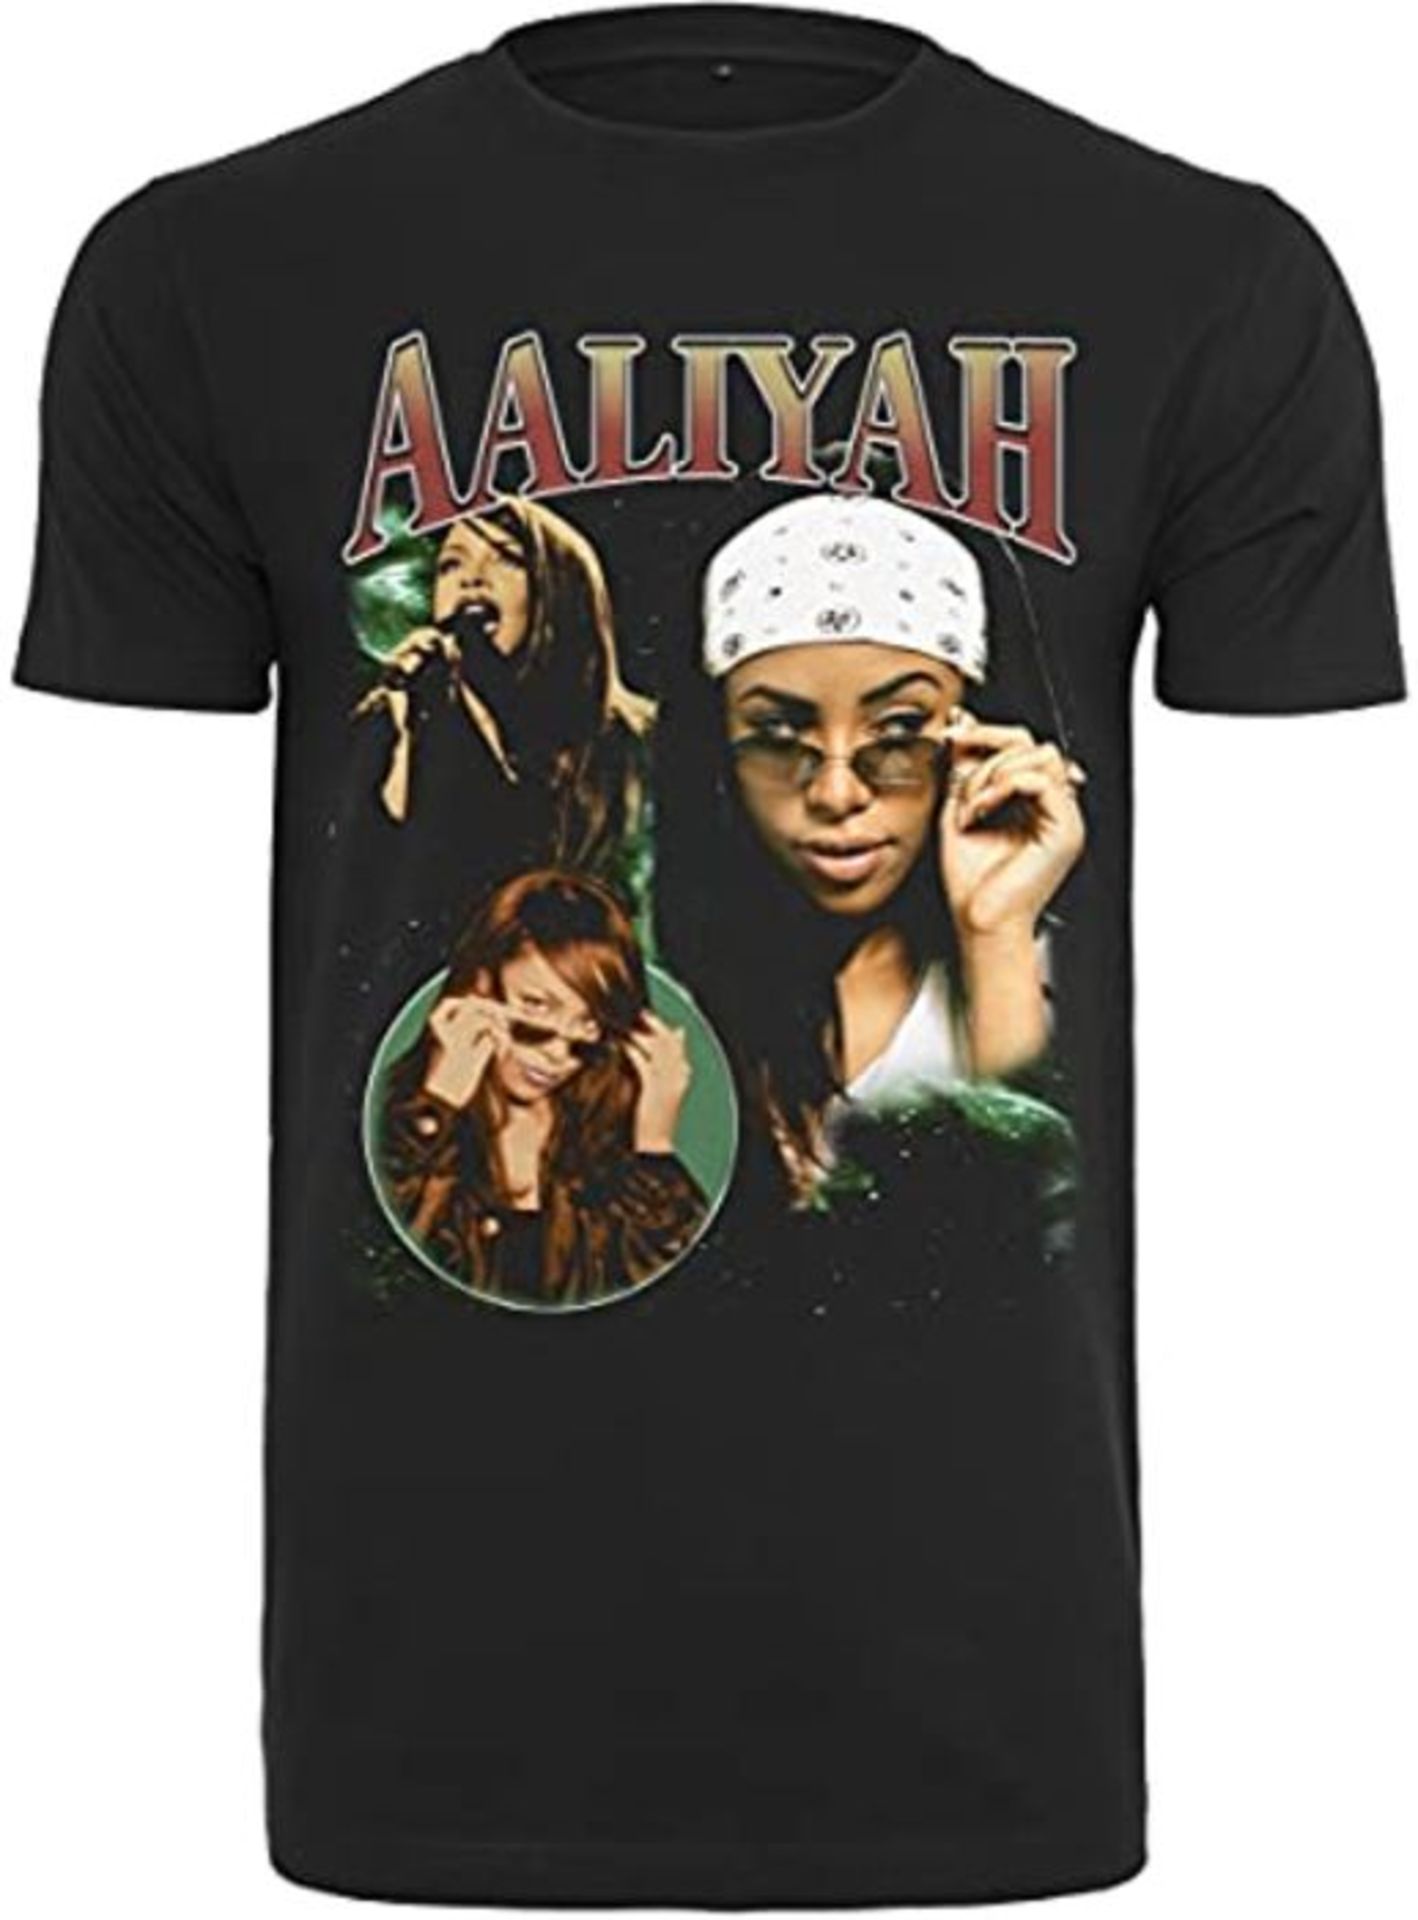 Mister Tee Men's Aaliyah Retro Oversize Tee T-Shirt, Black, XL